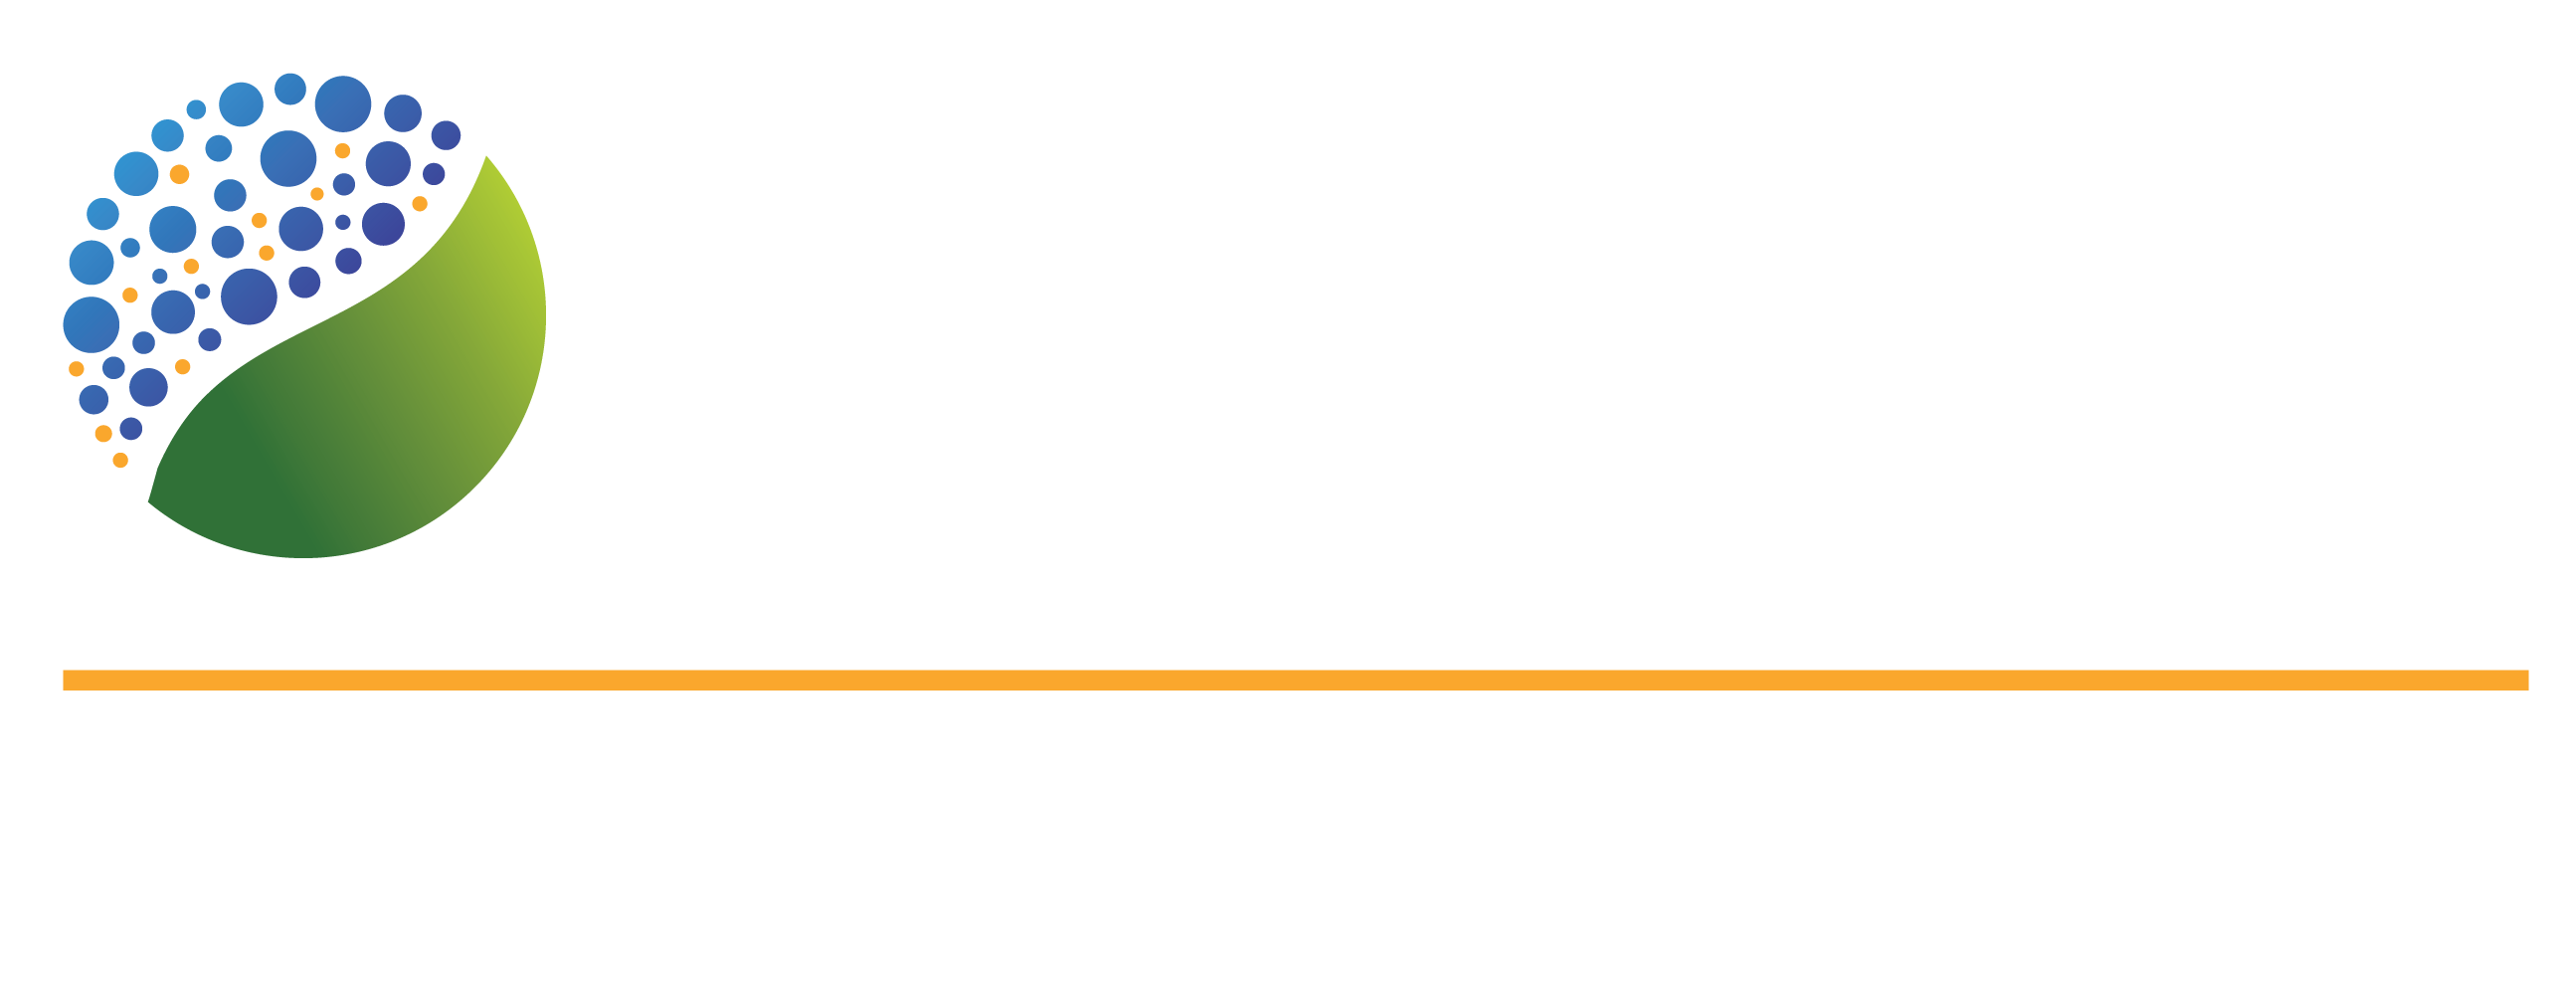 Port of Newcastle